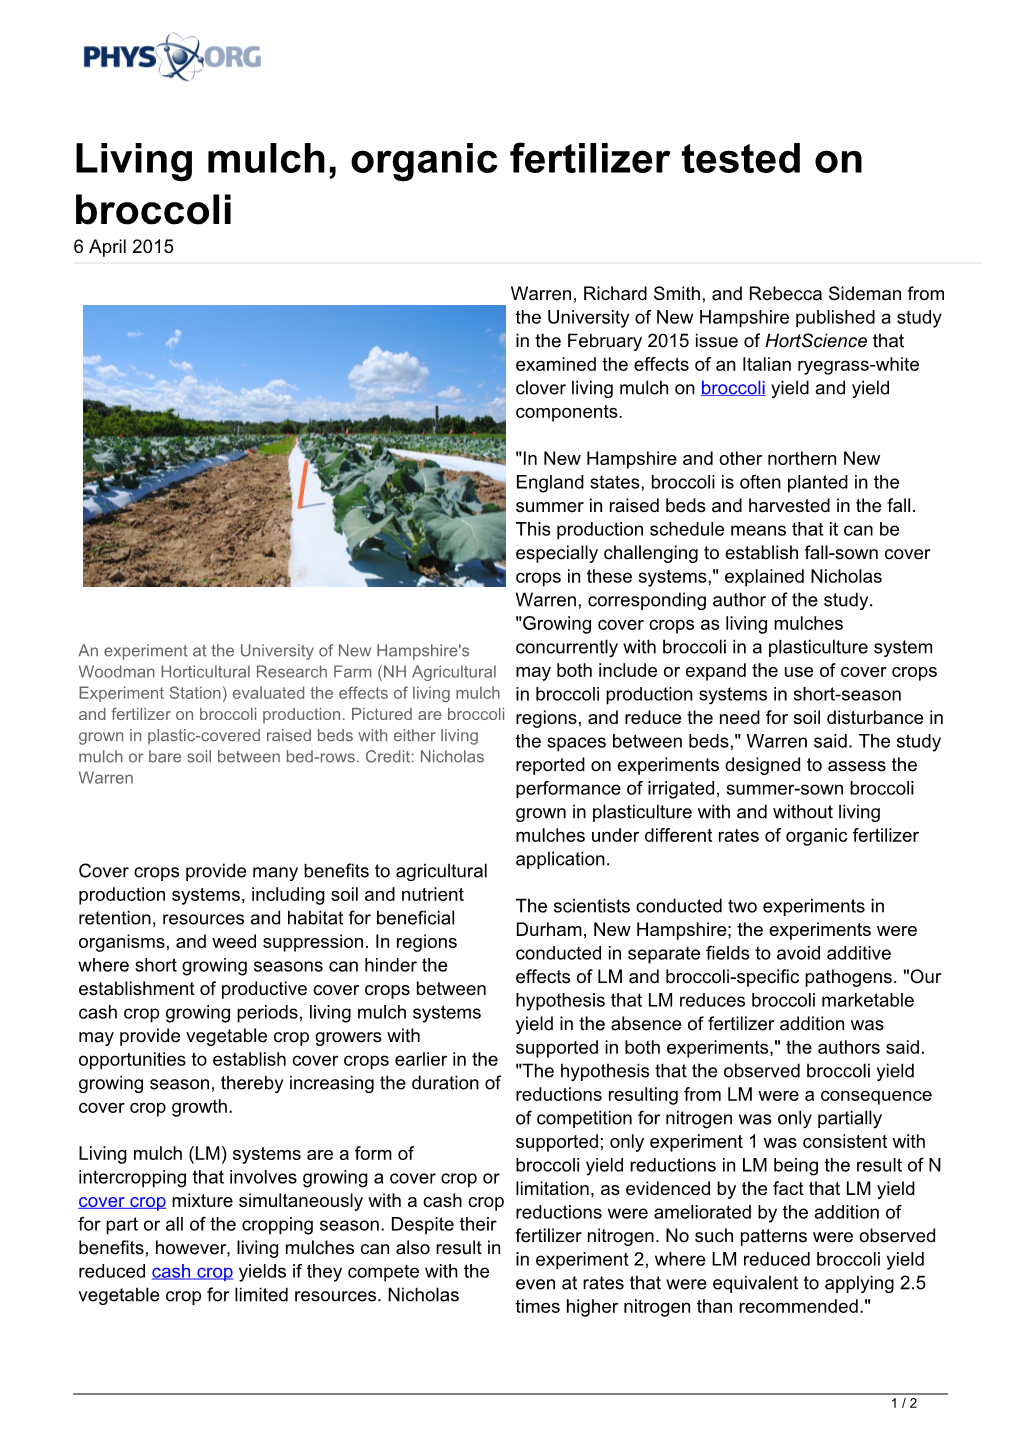 Living Mulch, Organic Fertilizer Tested on Broccoli 6 April 2015